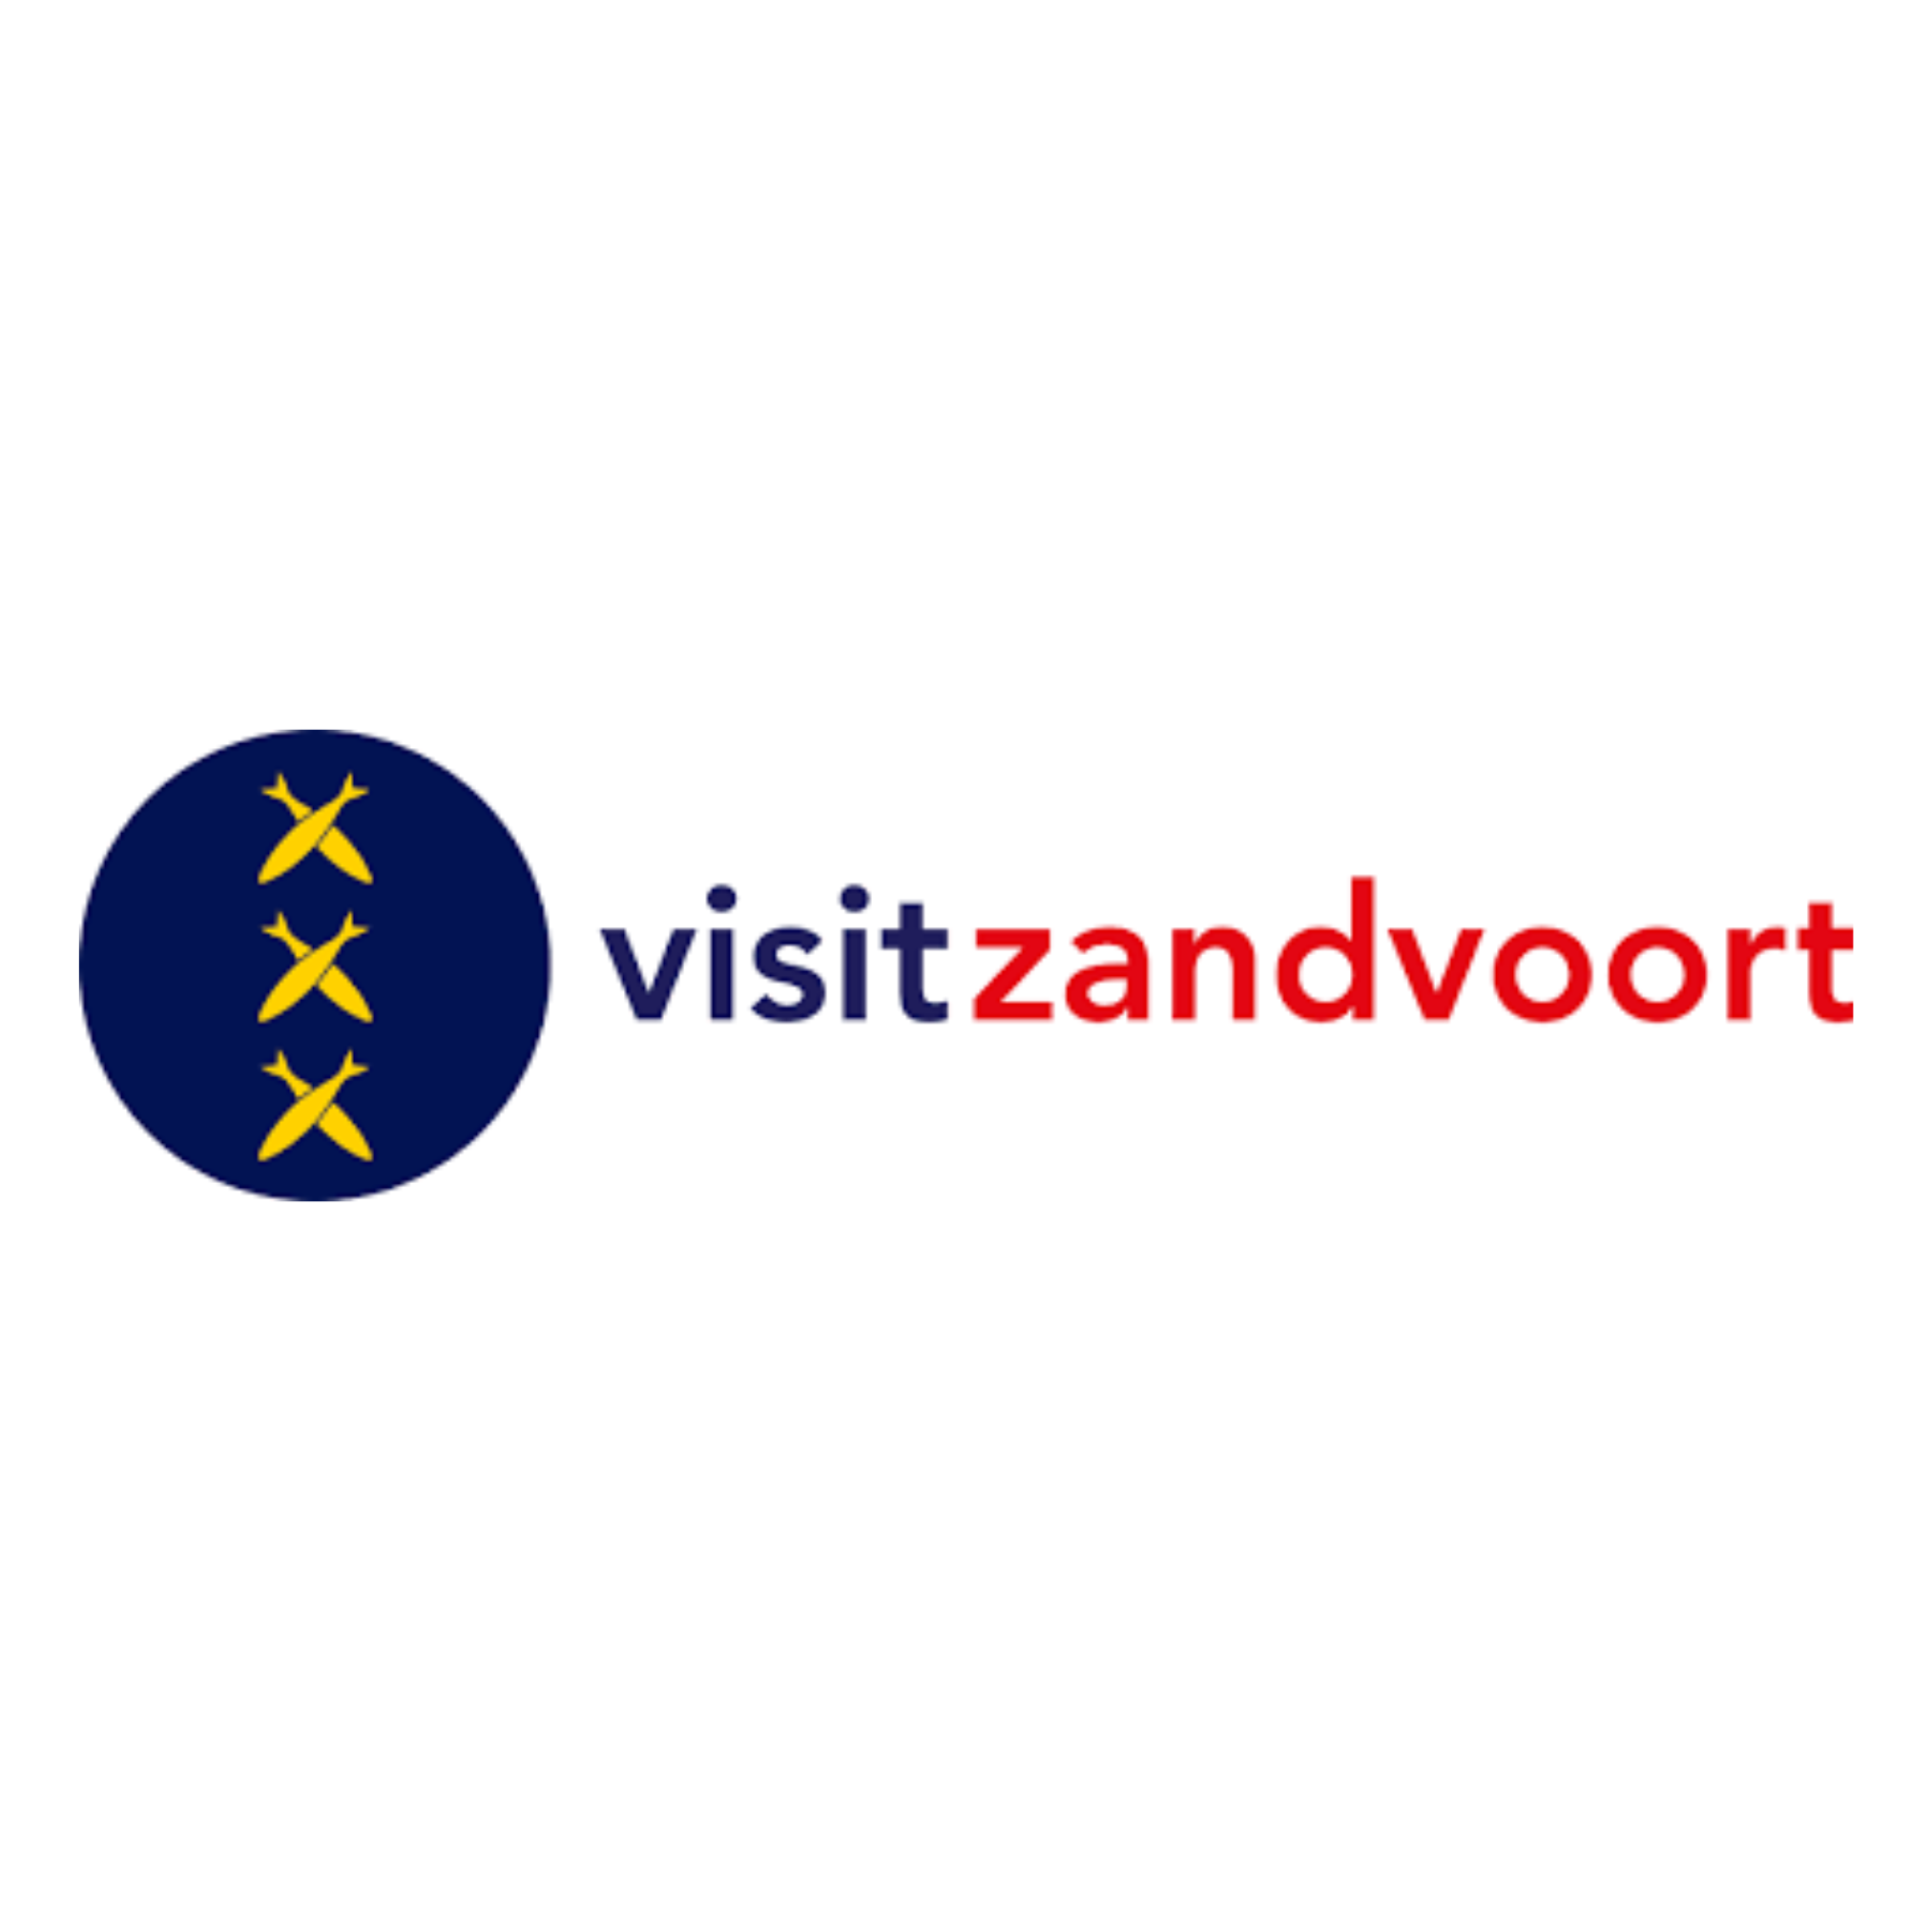 Visit Zandvoort - Zandvoort Marketing _ Joyce Goverde.png